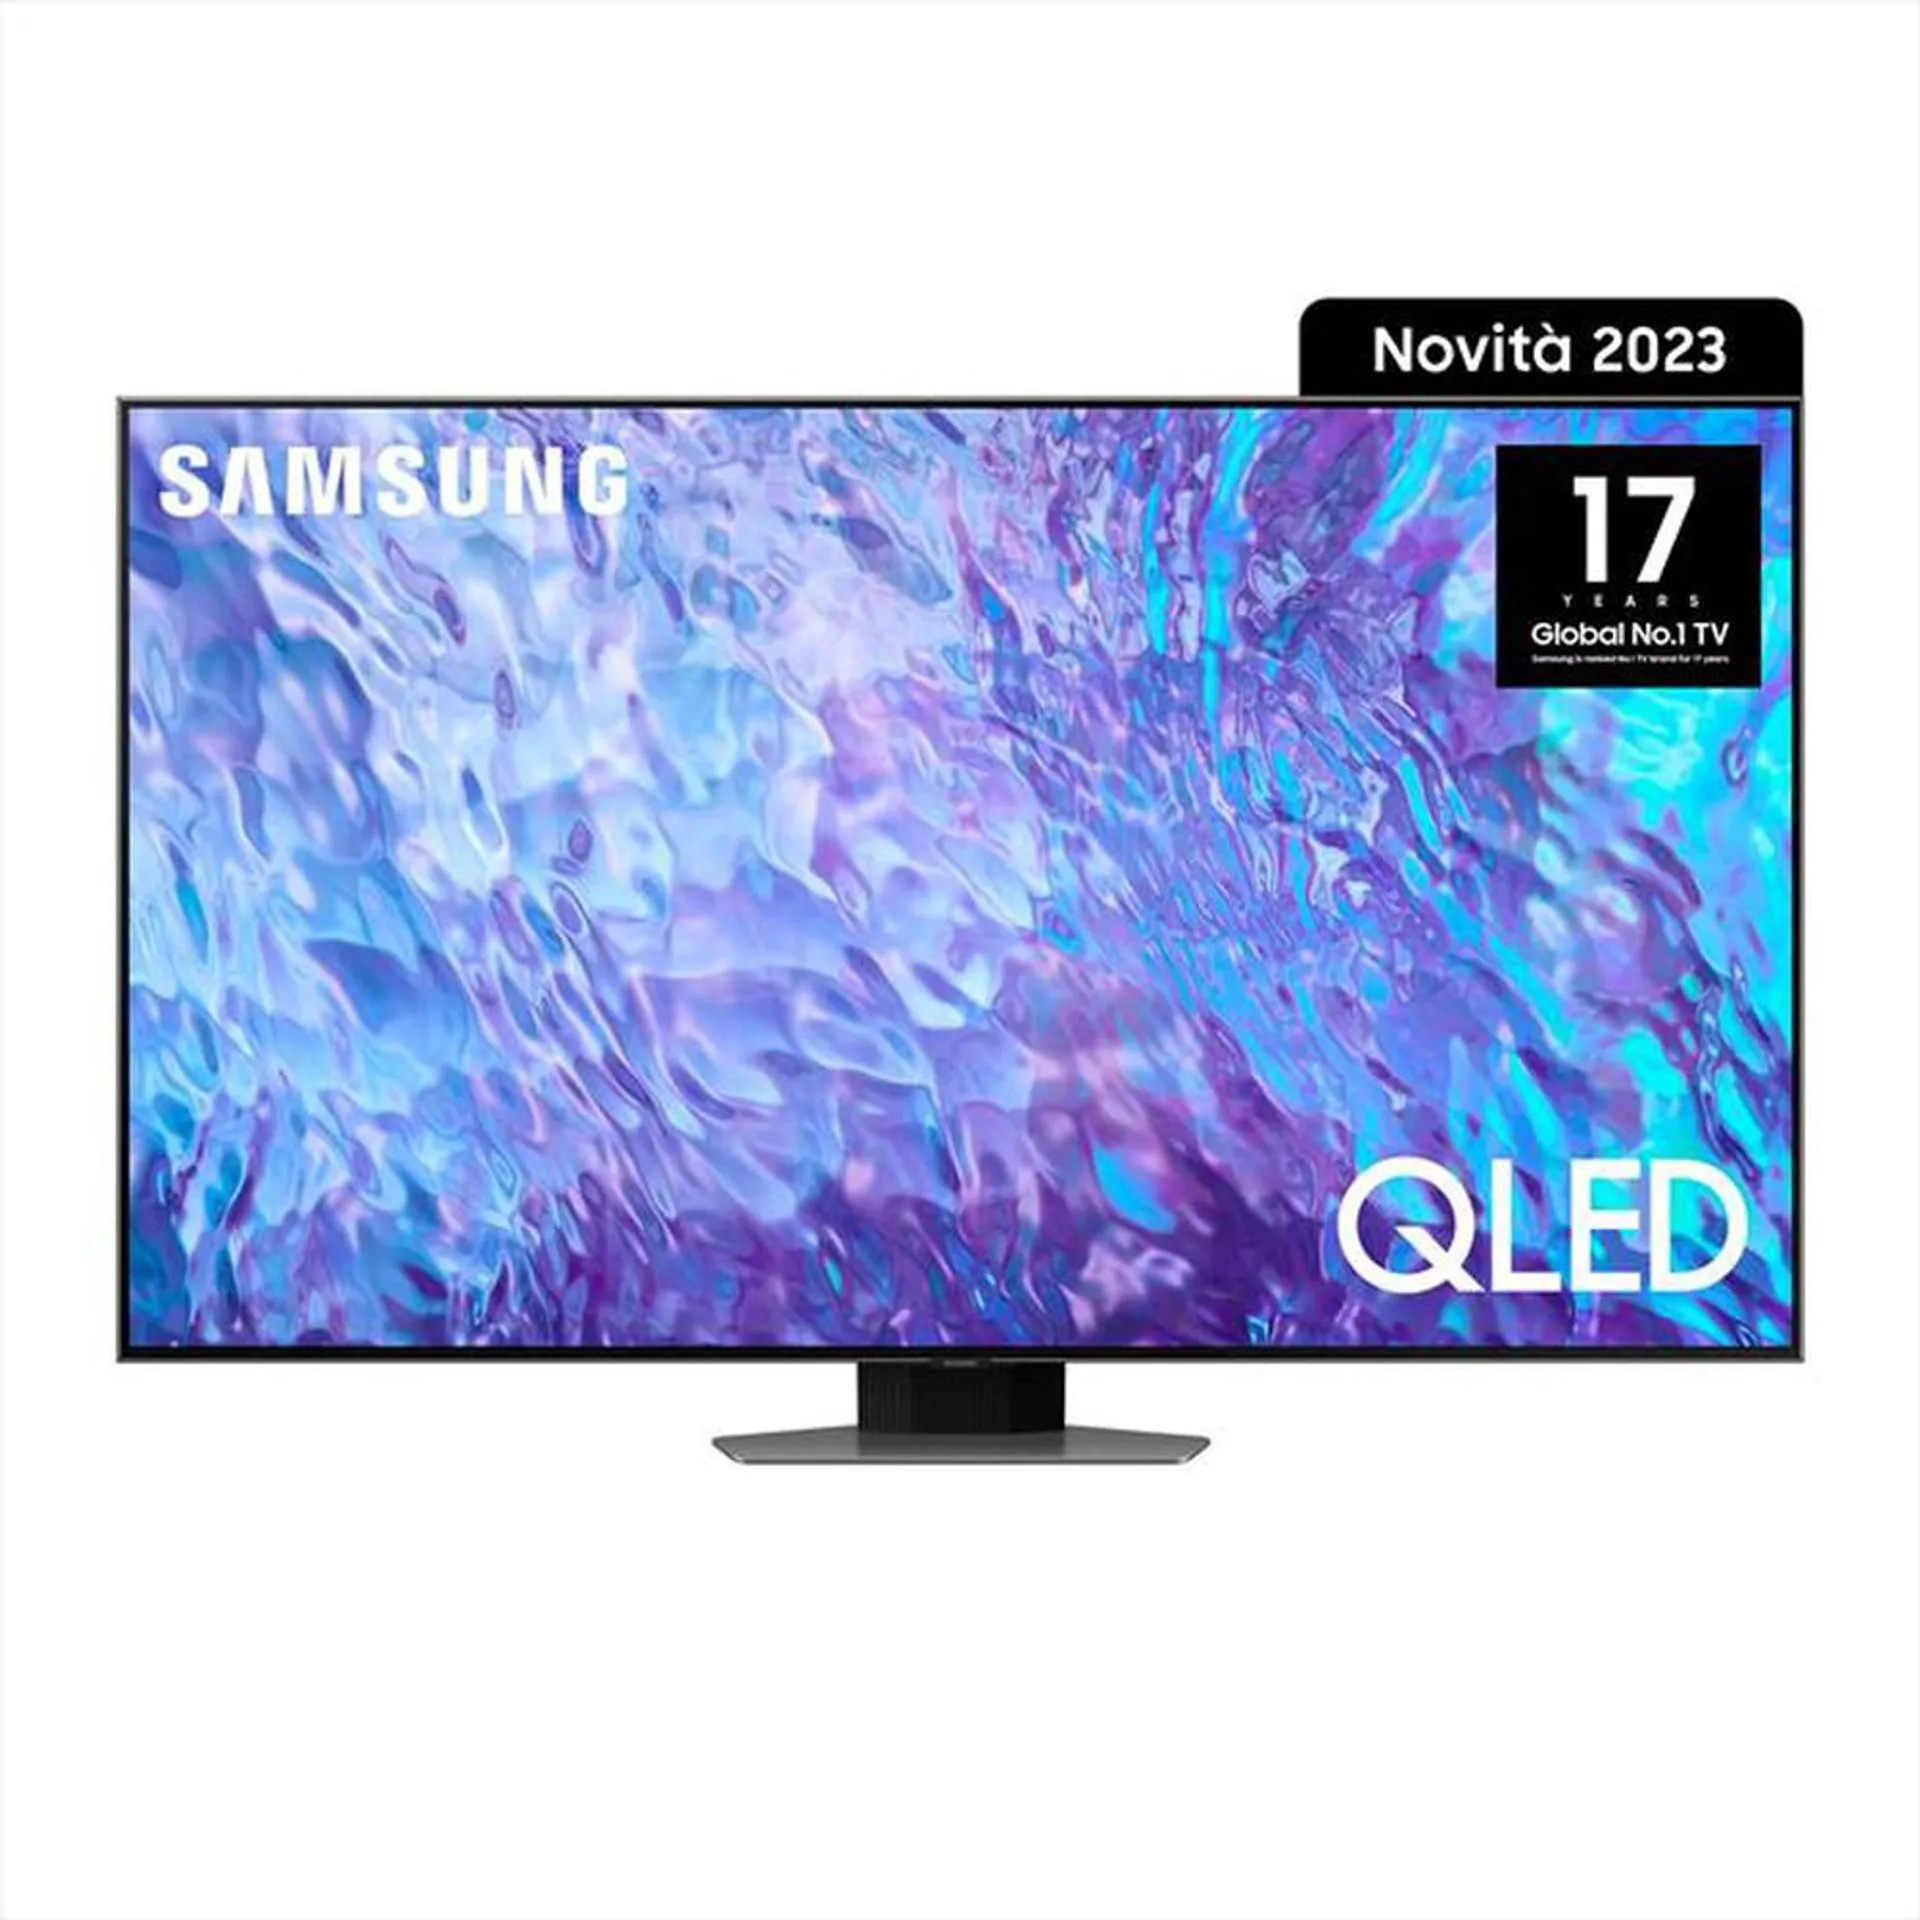 SAMSUNG - Smart TV Q-LED UHD 4K 55" QE55Q80CATXZT-CARBON SILVER